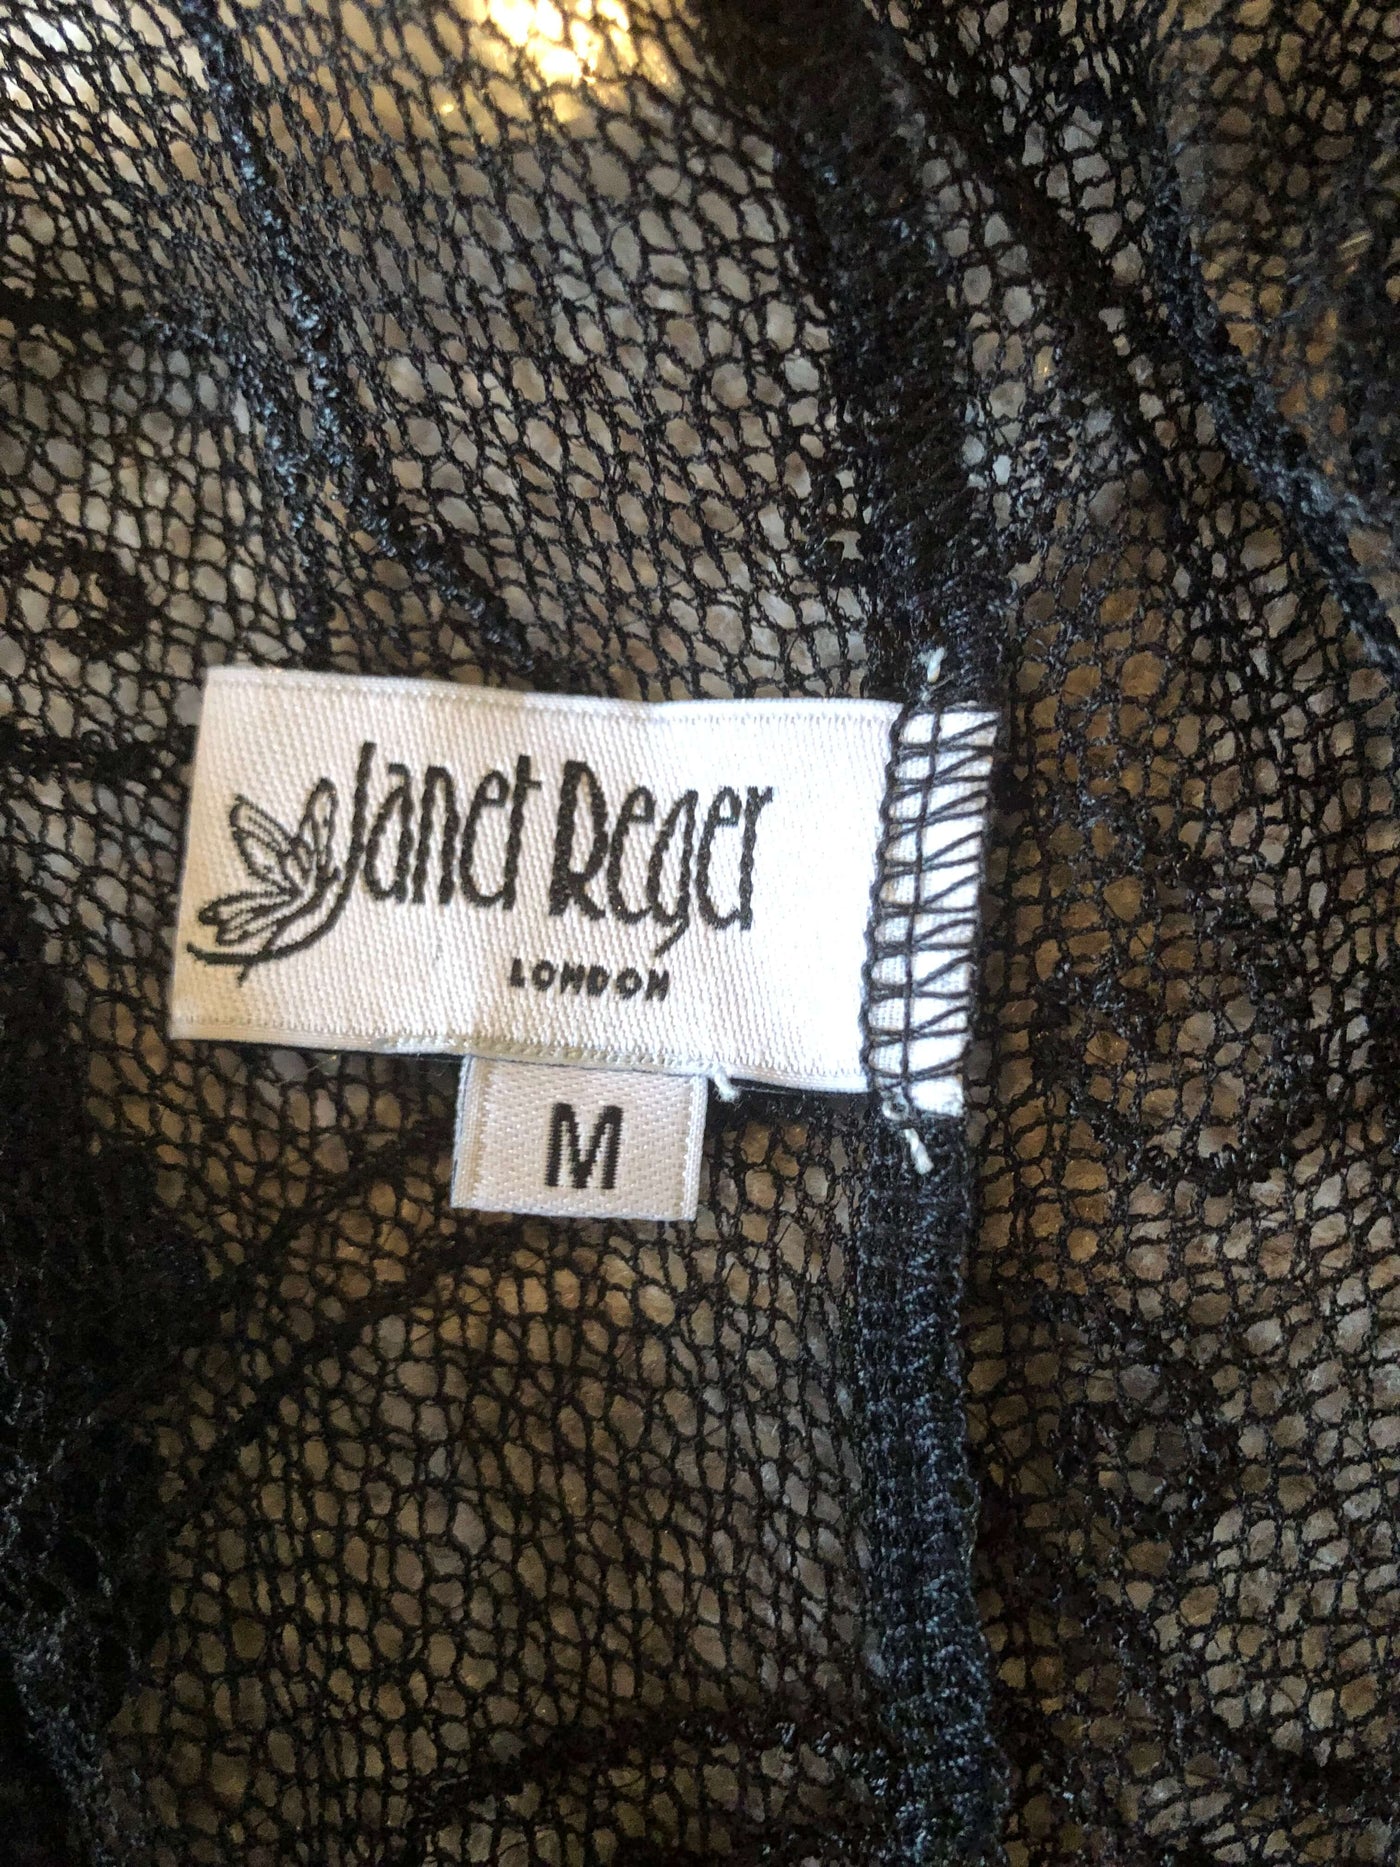 Sheer Janet Reger cami shorts